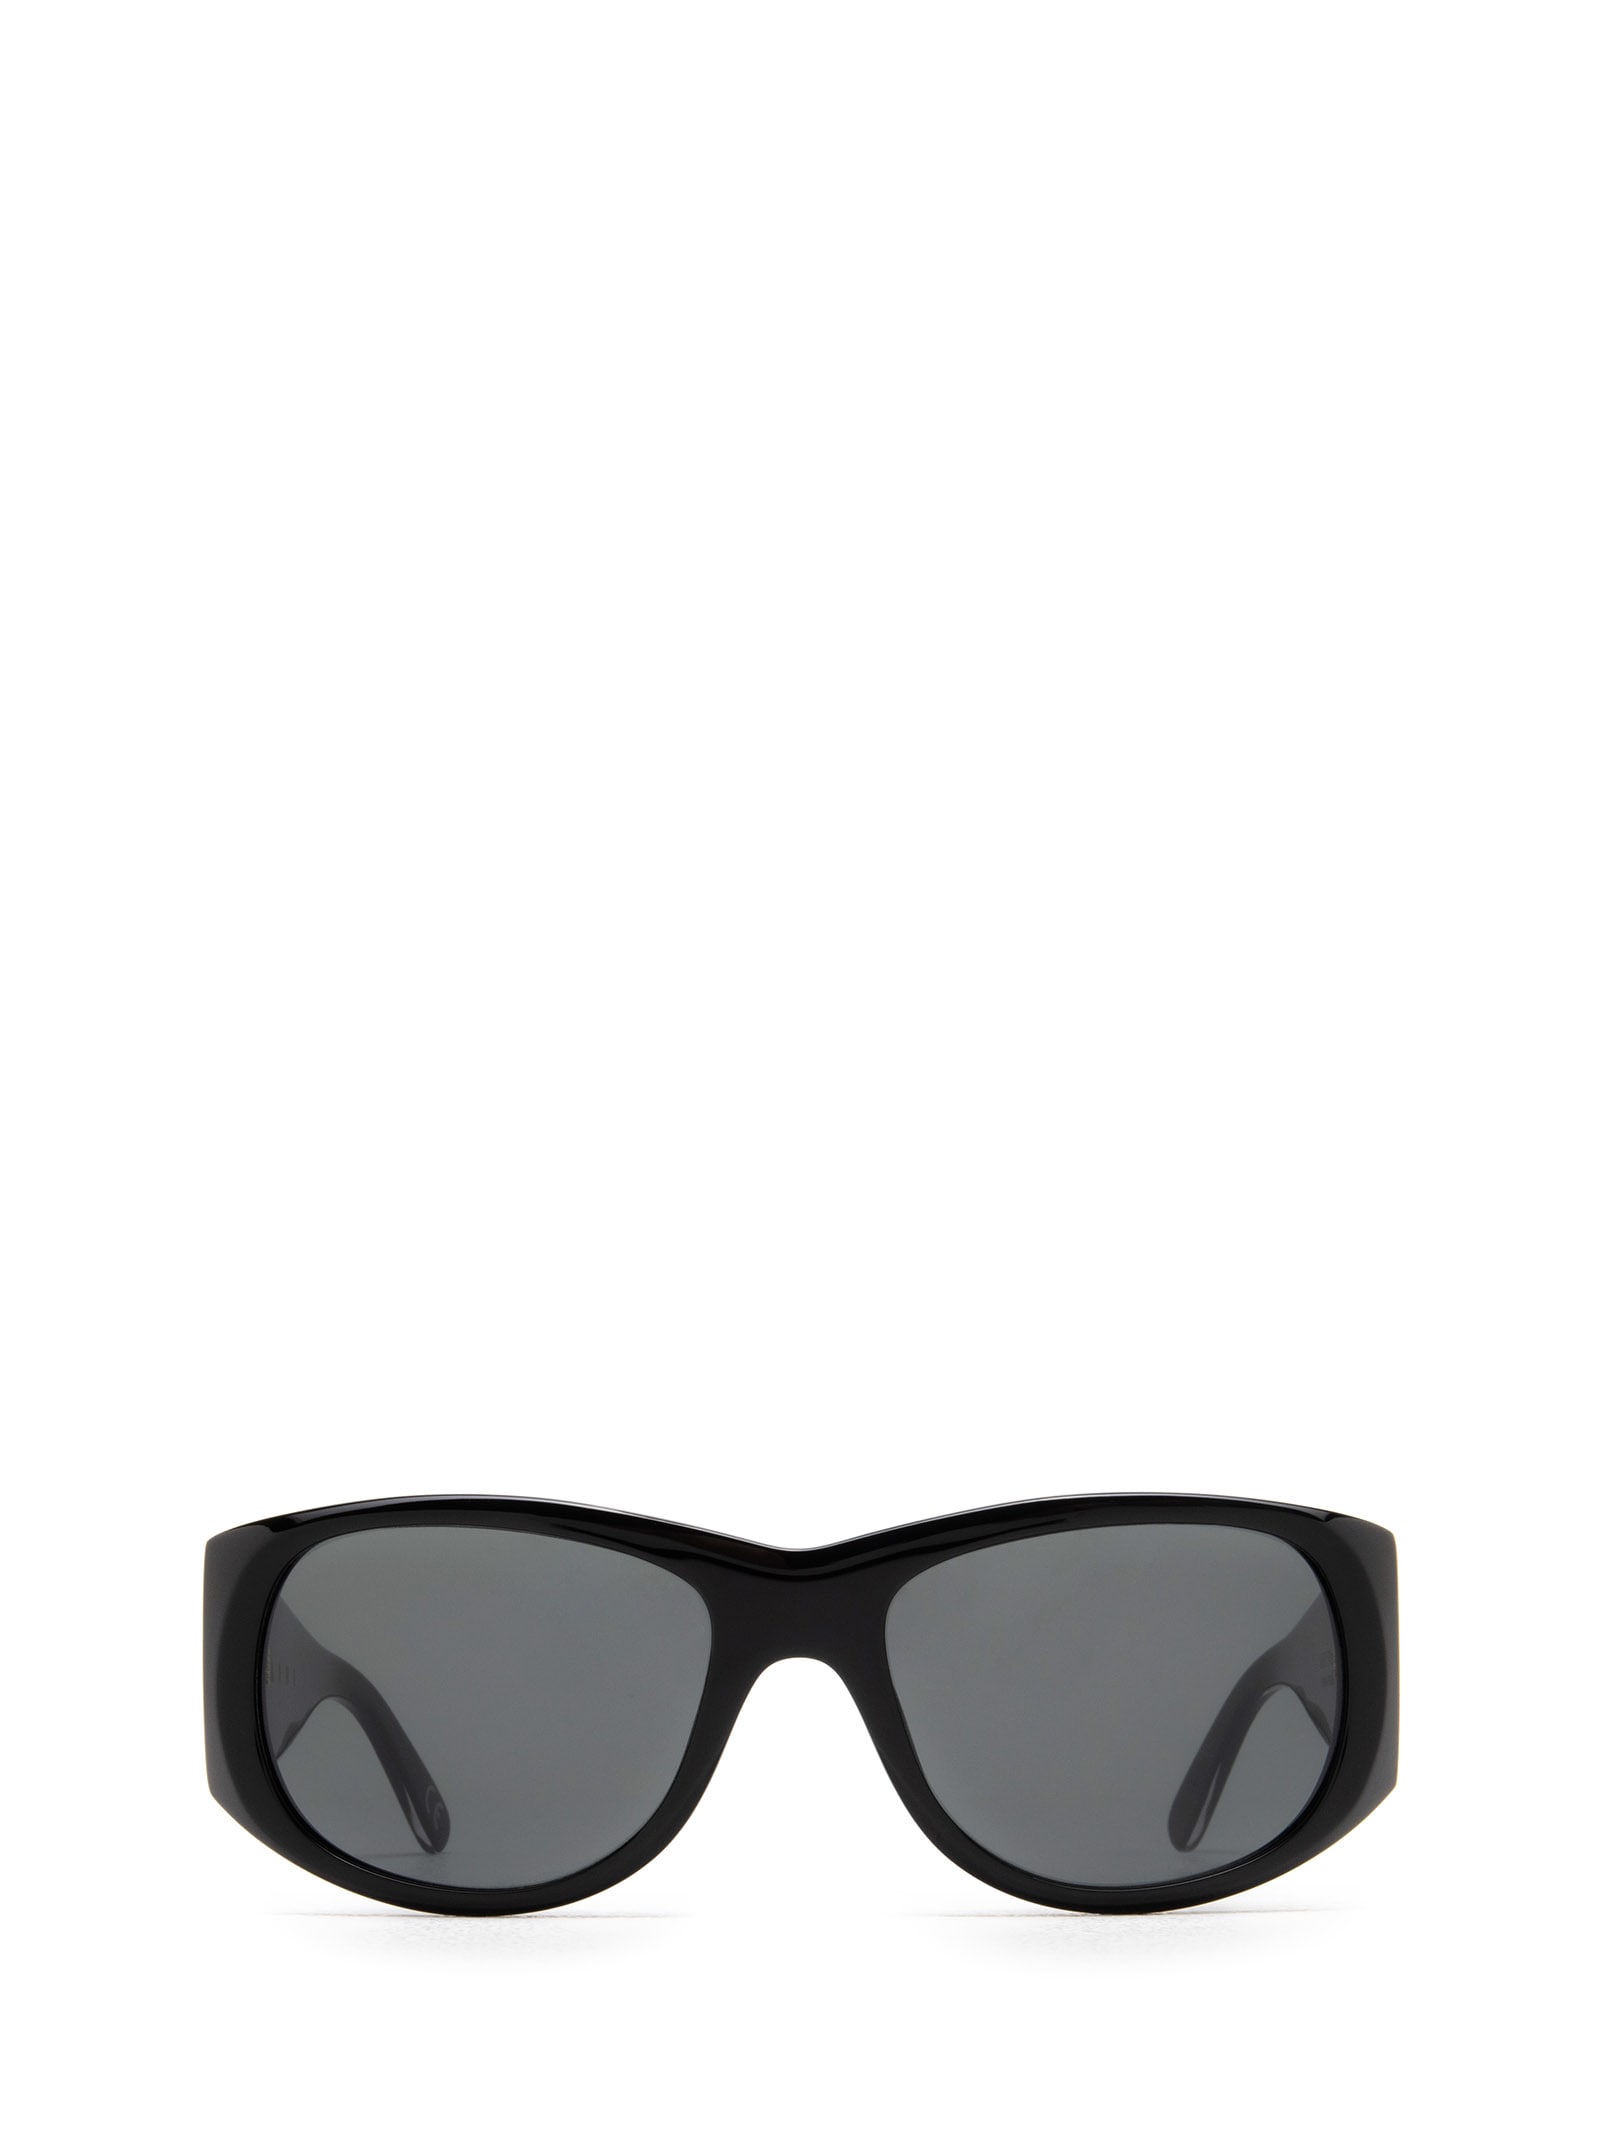 Marni Eyewear Orinoco River Black Sunglasses